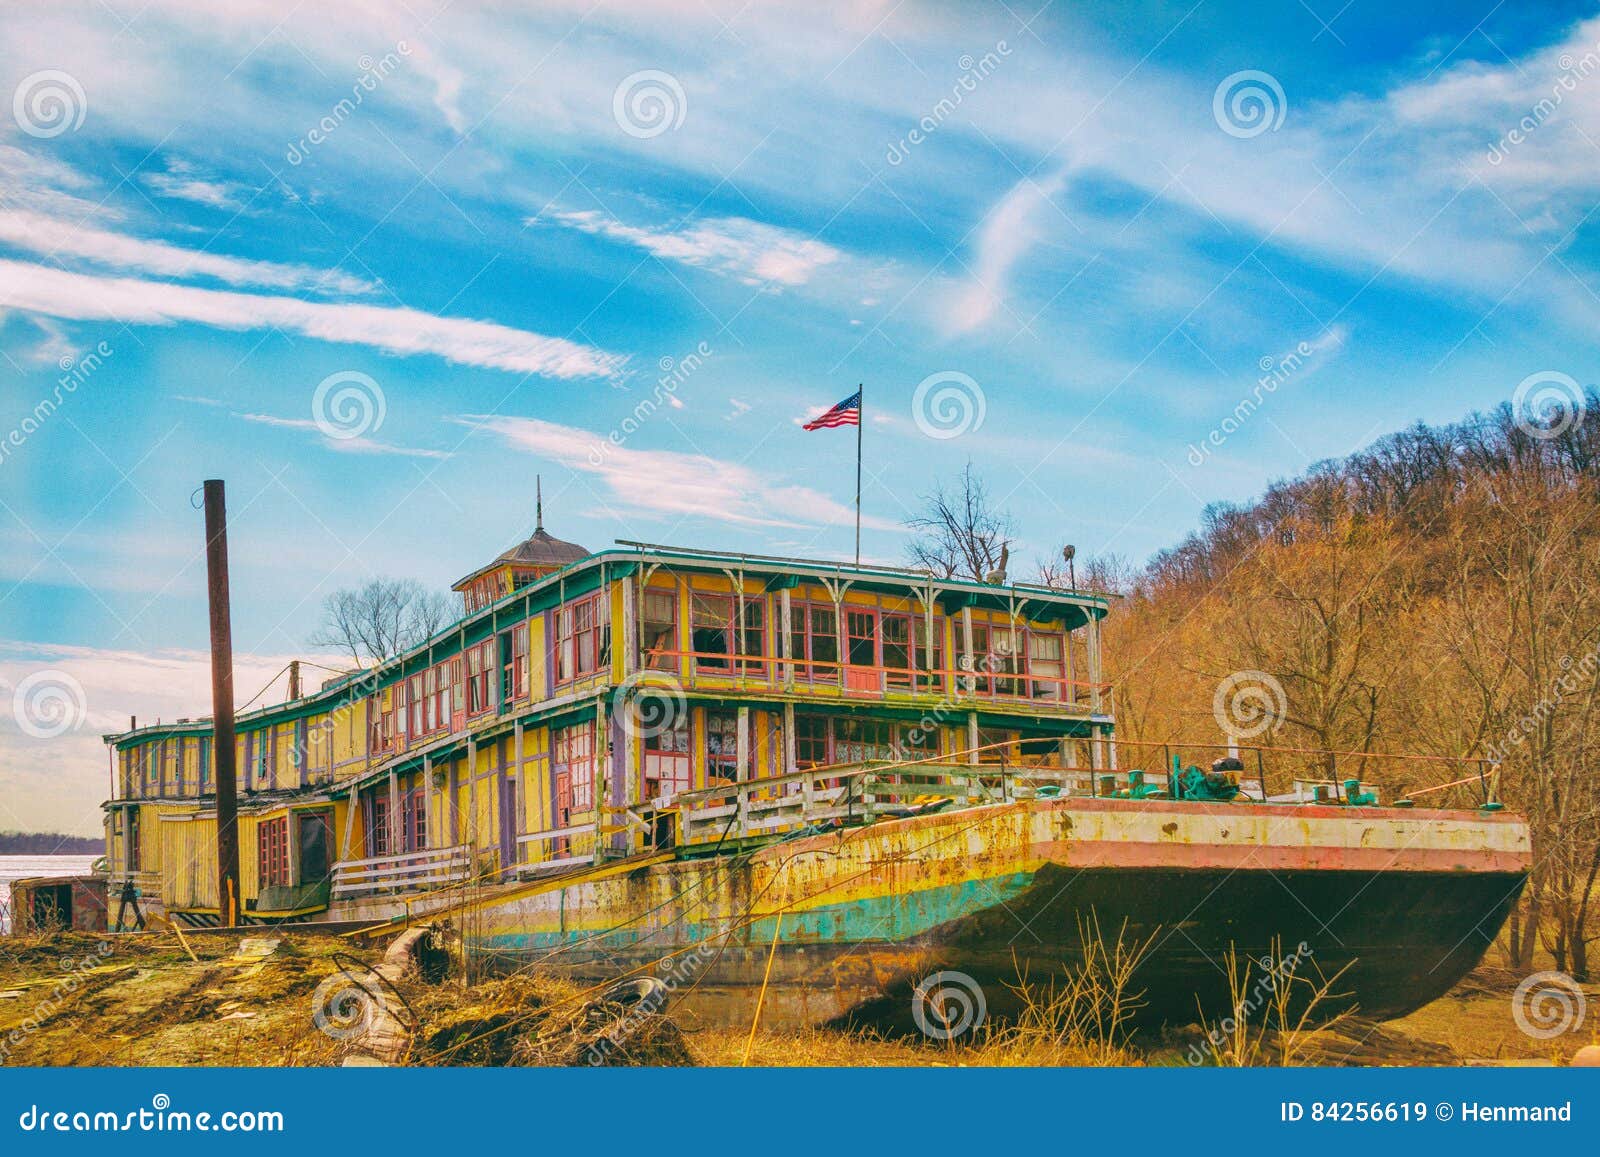 goldenrod showboat aground on the mississippi river